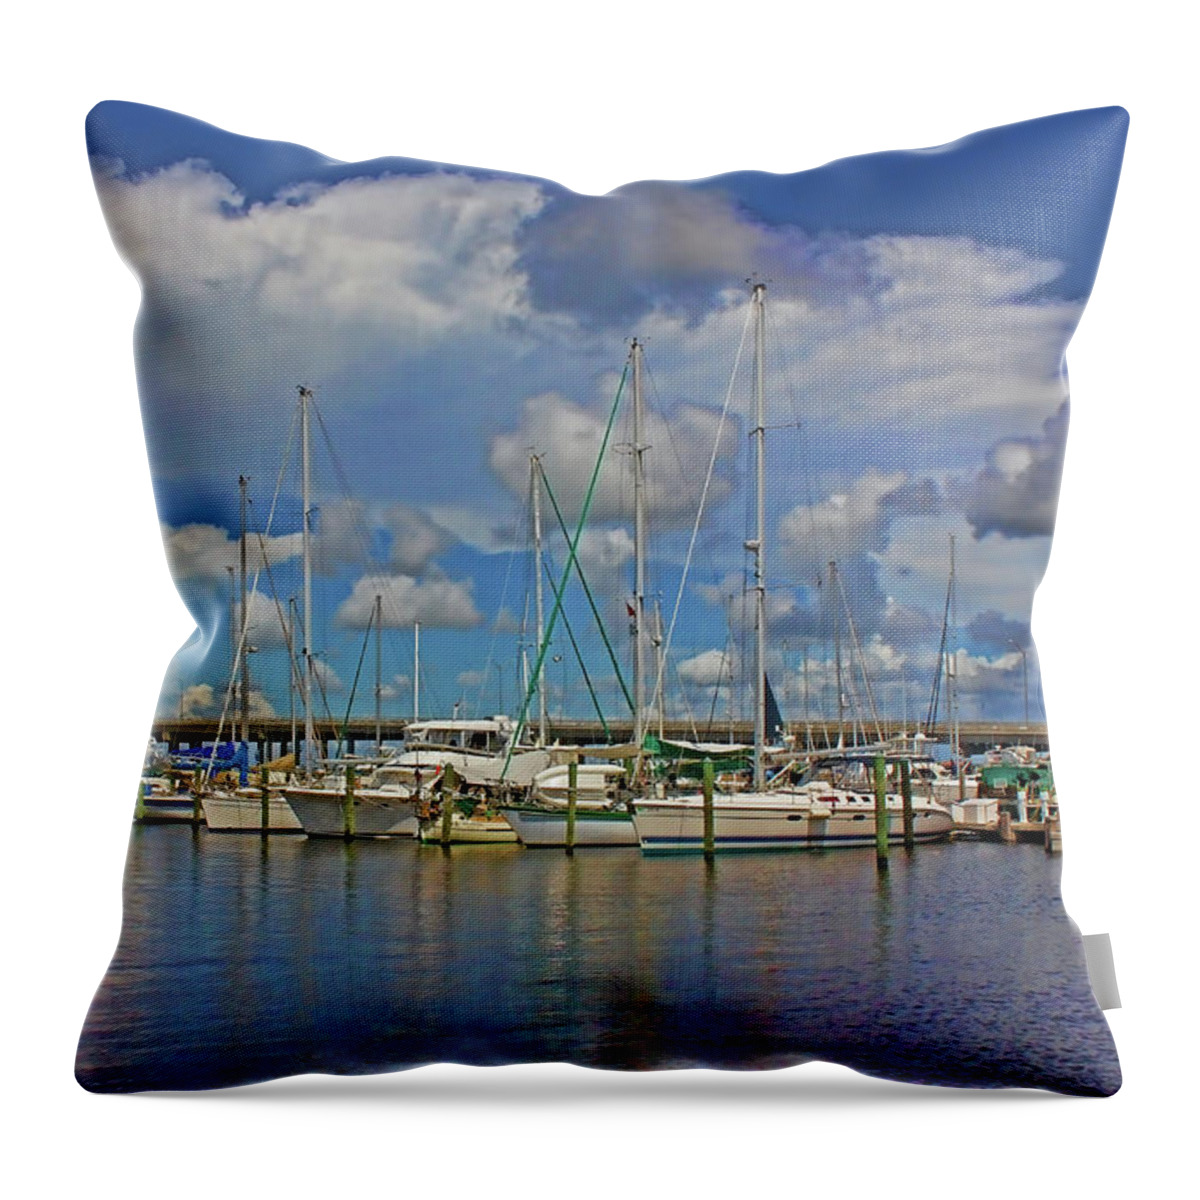 Downtown Bradenton Throw Pillow featuring the photograph Bradenton Waterfront Marina by HH Photography of Florida